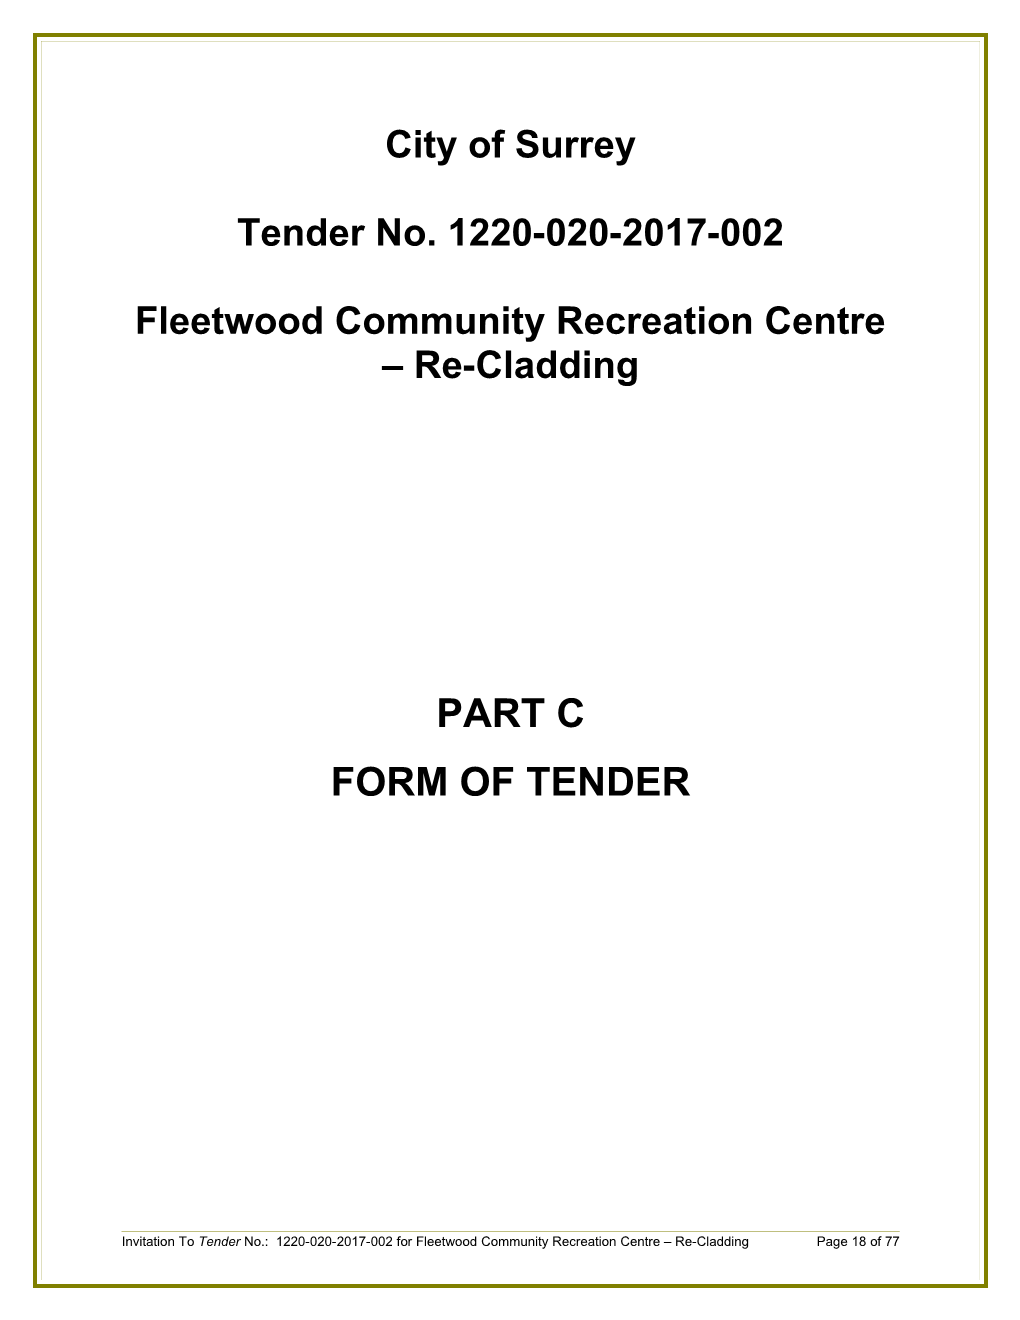 Fleetwood Community Recreation Centre Re-Cladding